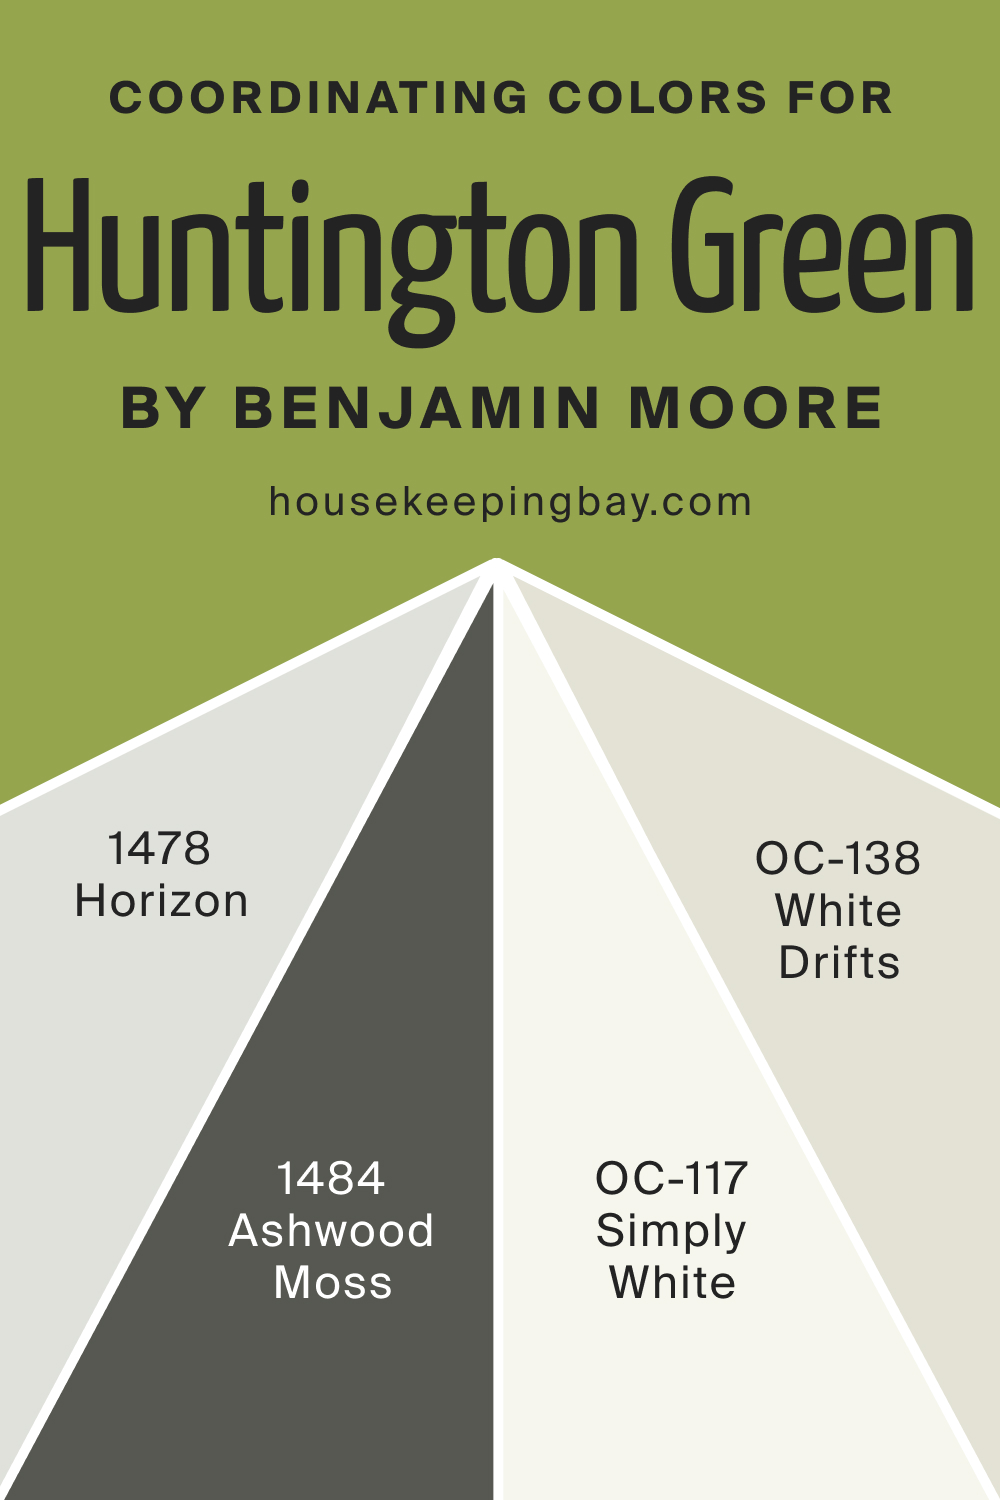 Coordinating Colors of Huntington Green 406